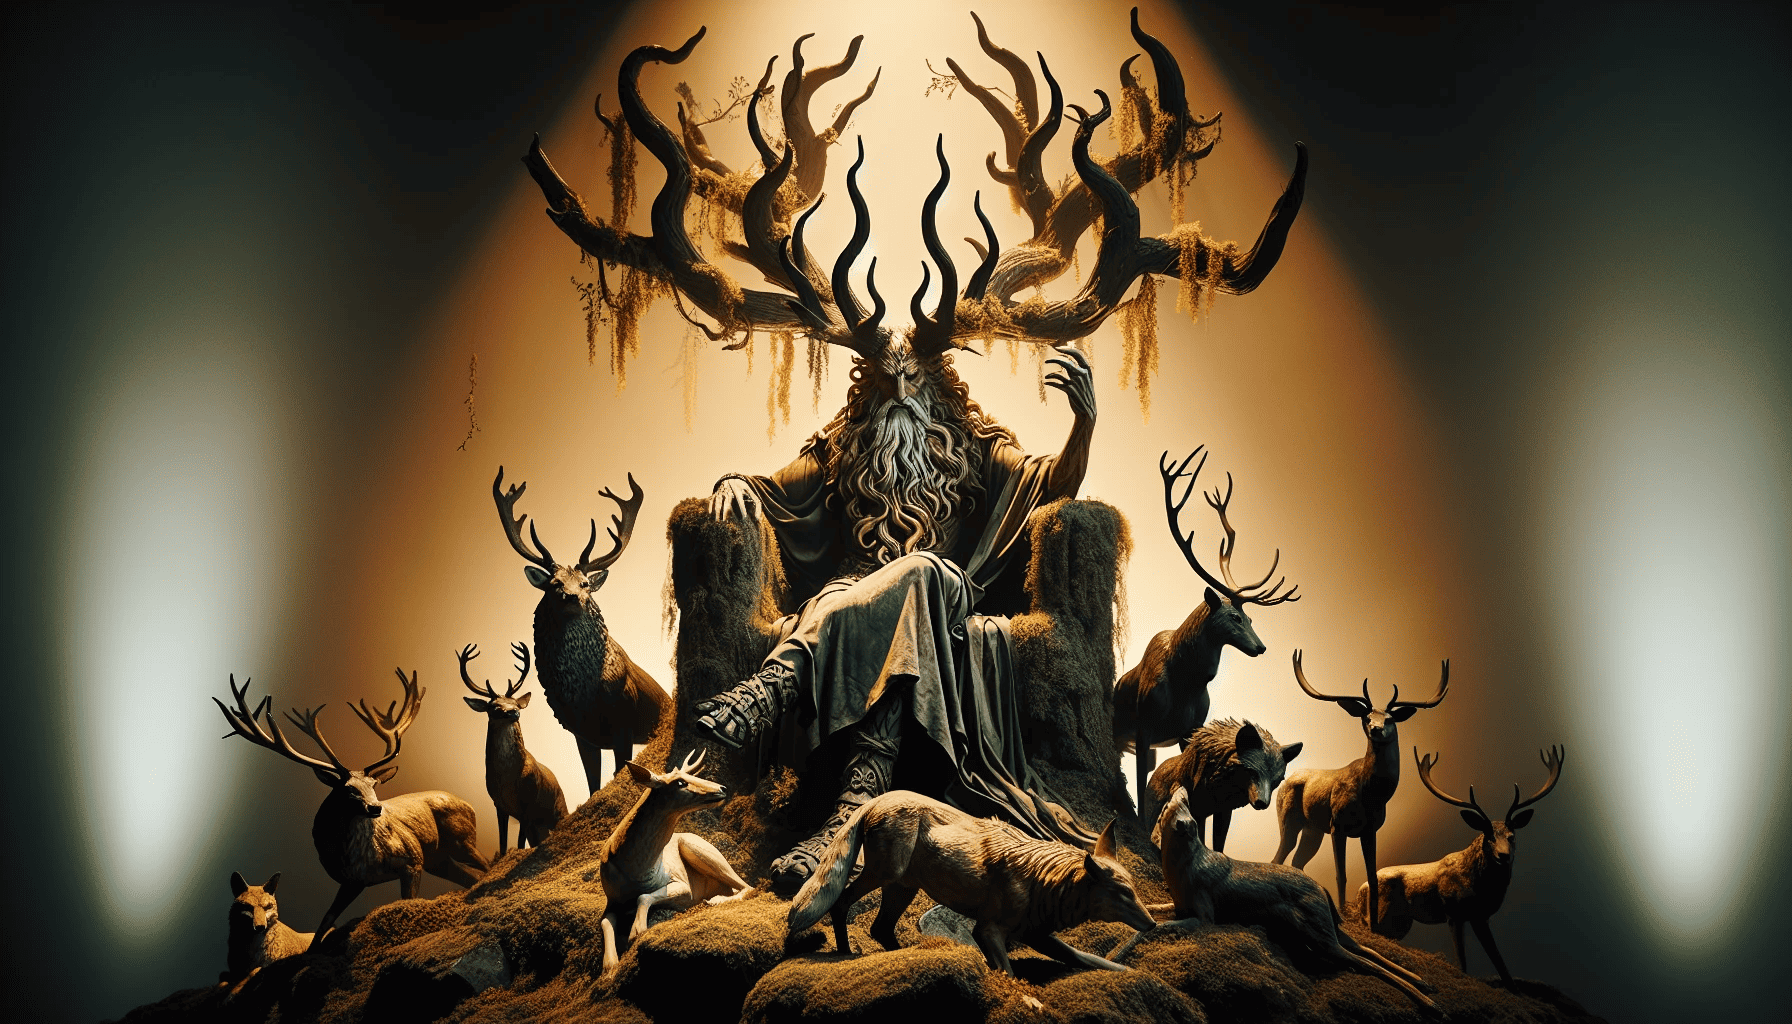 Artistic representation of Cernunnos, the horned god of the forest